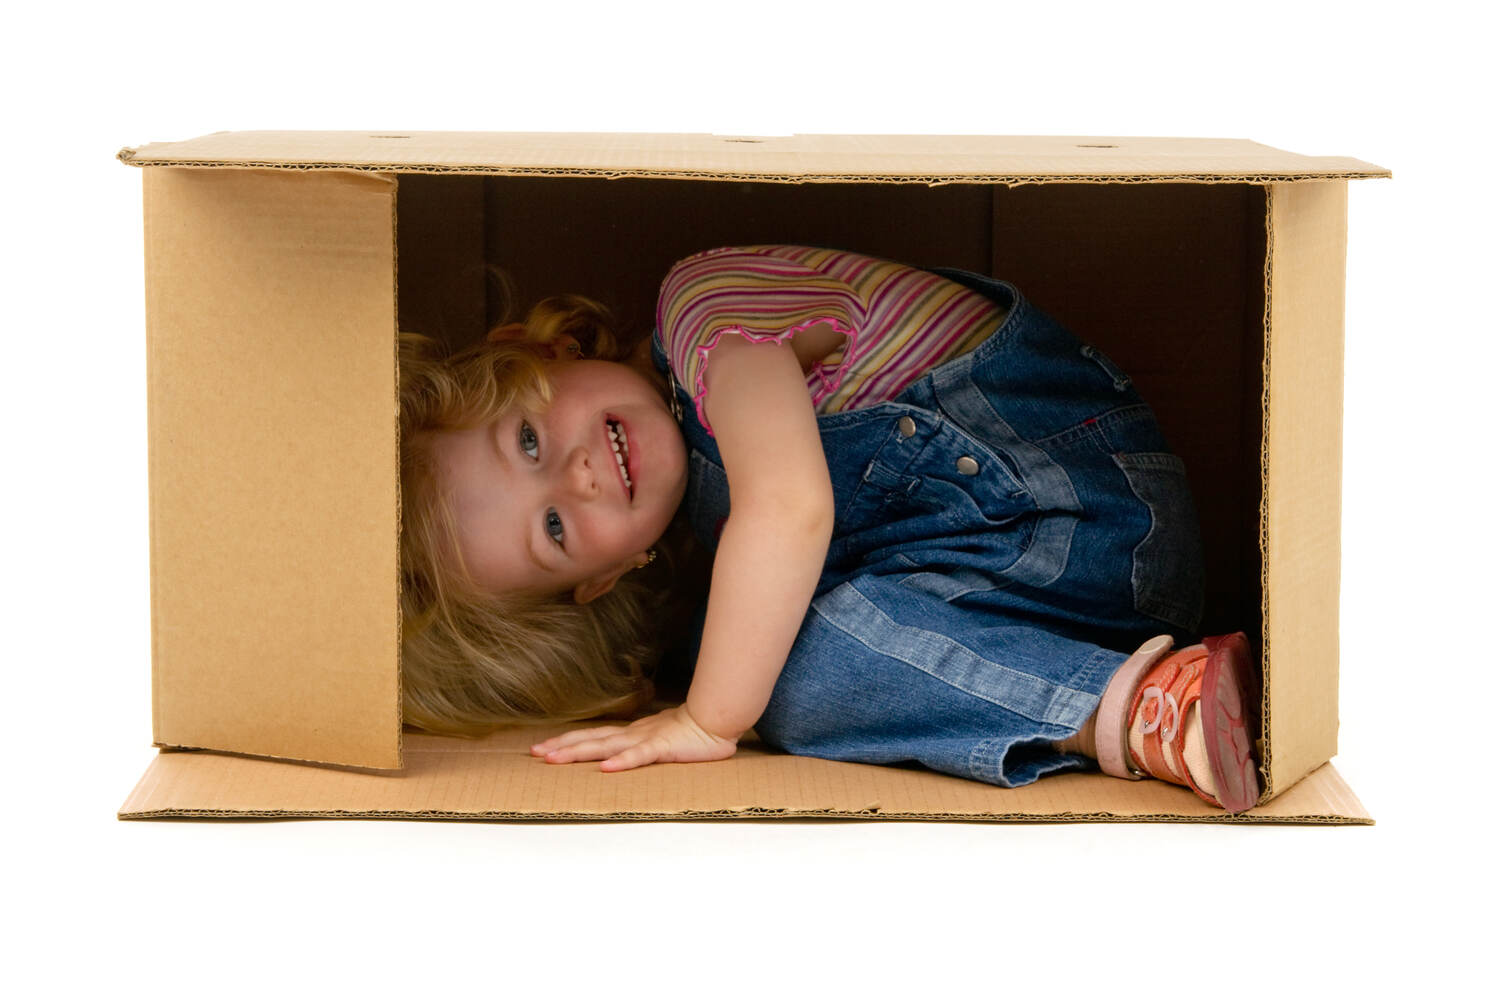 toddler inside a cardboard box